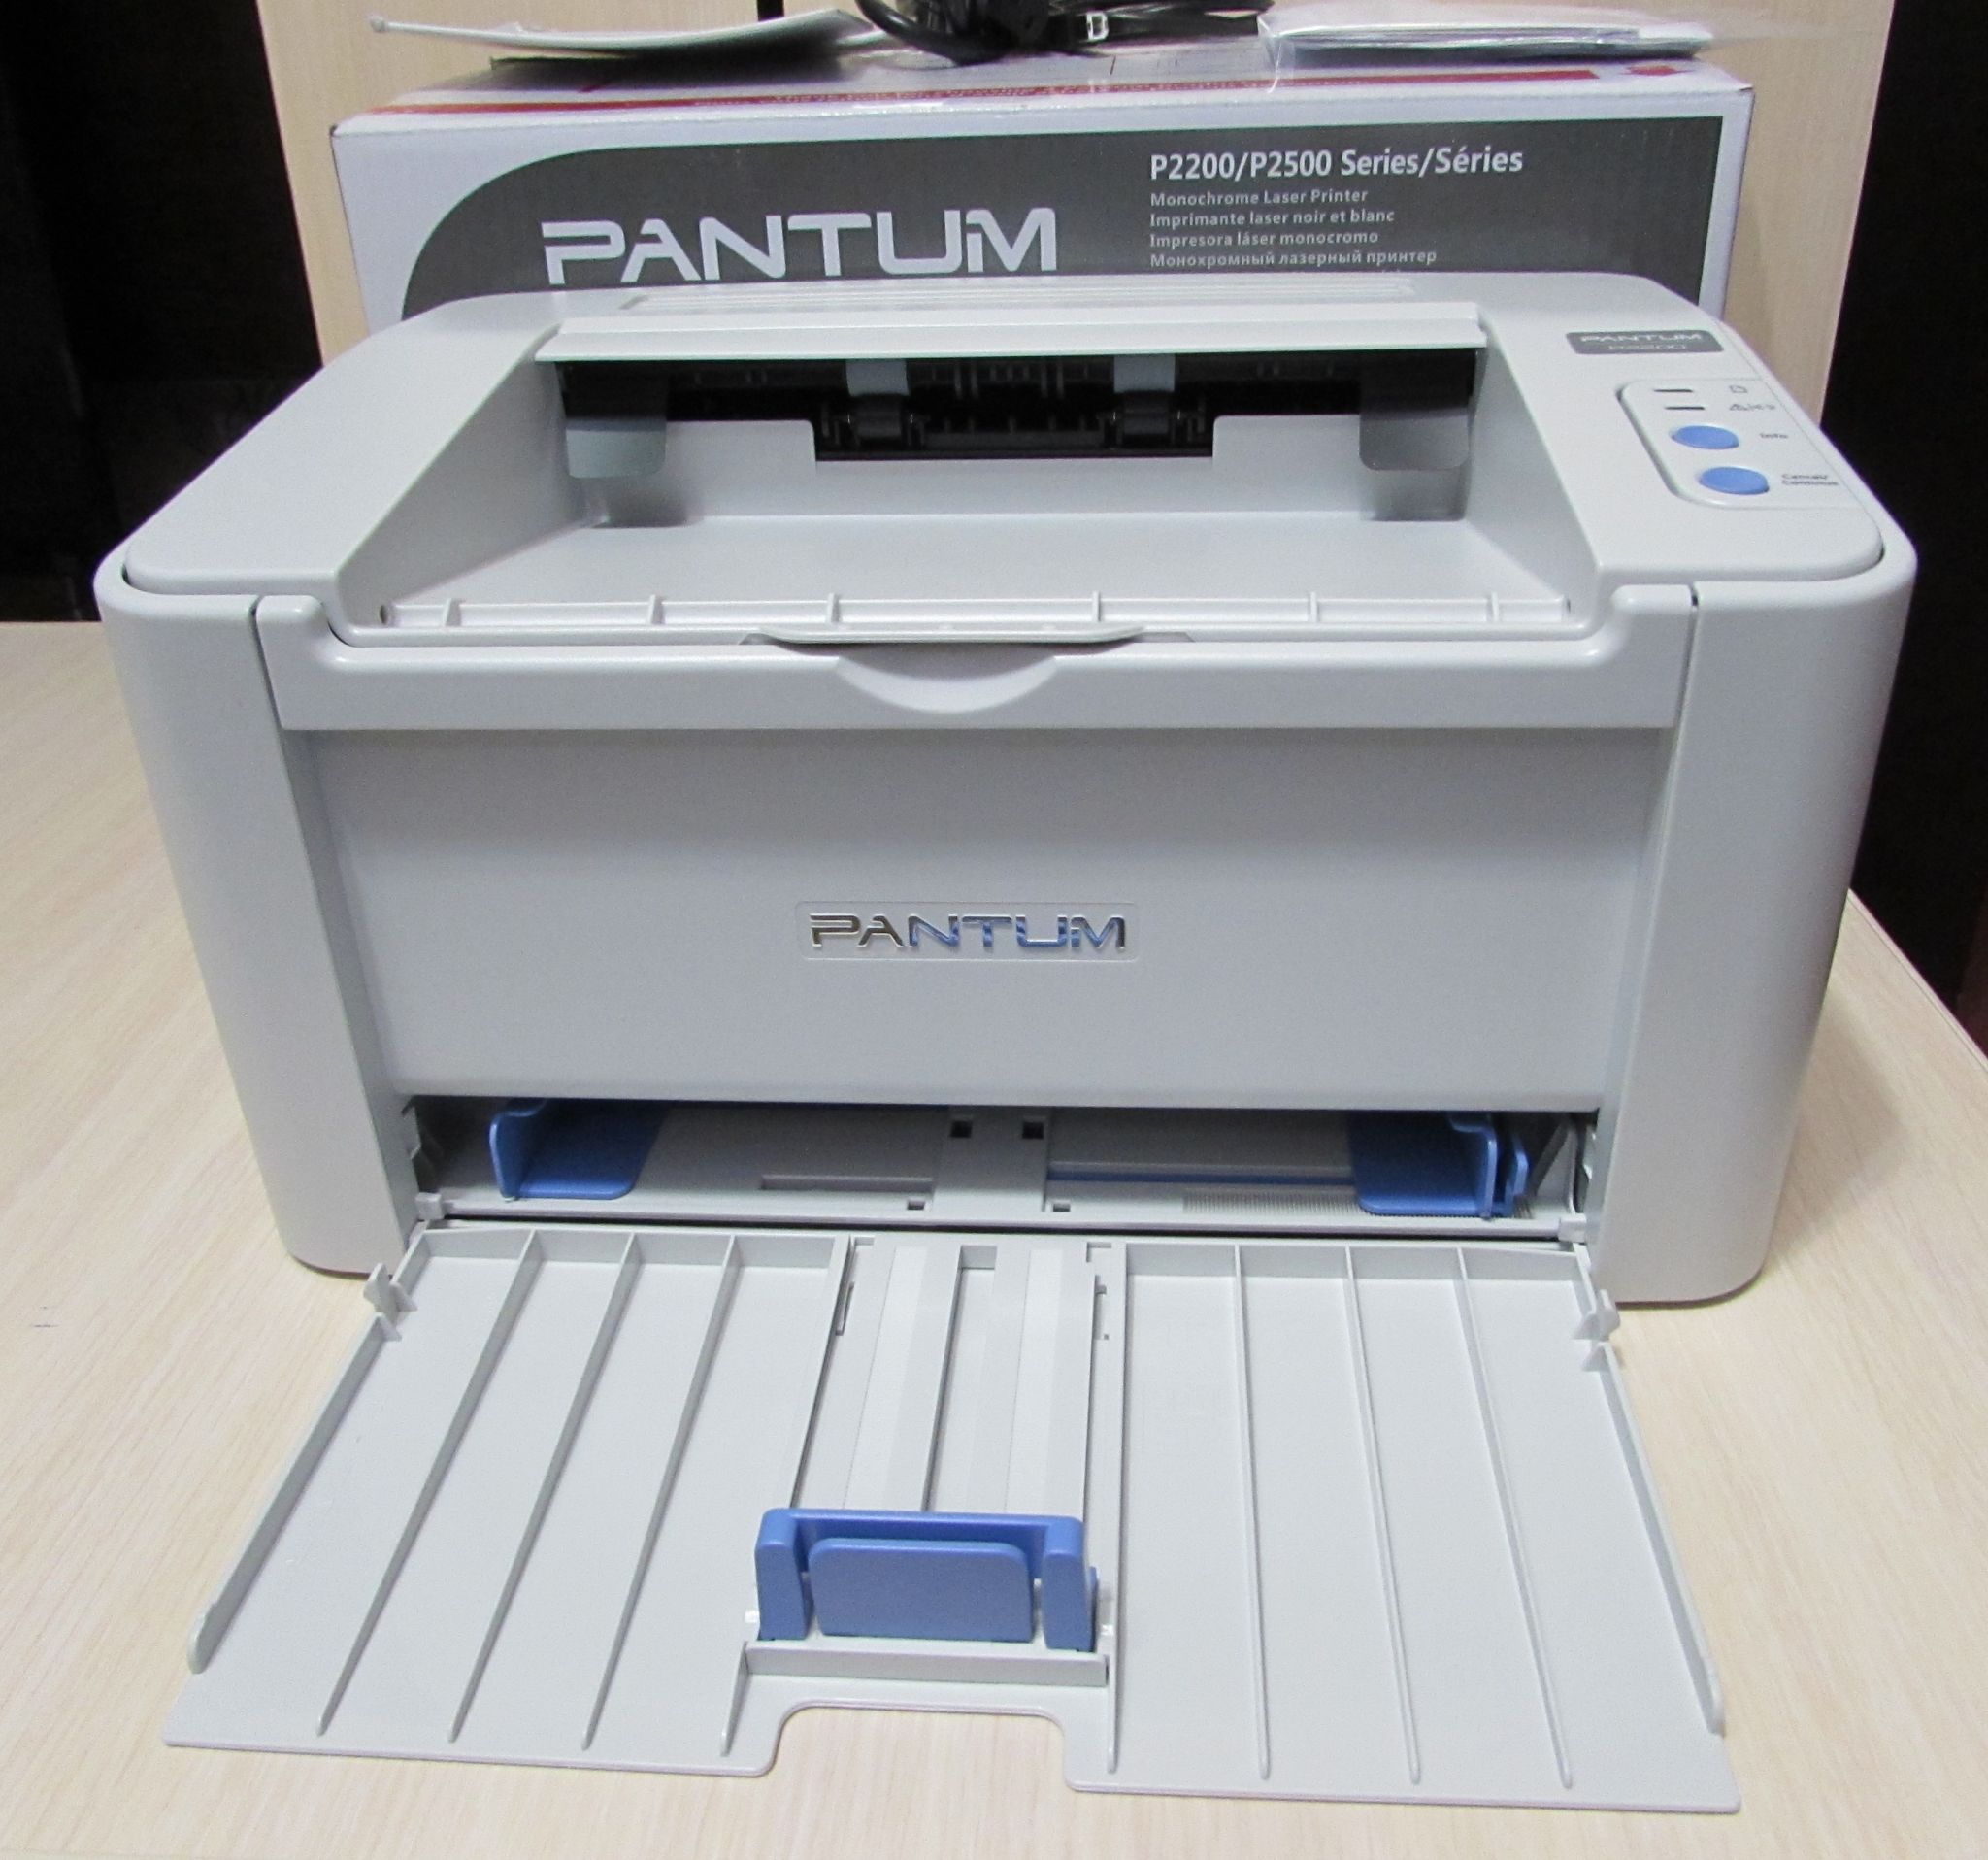 Pantum p2200 series драйвера